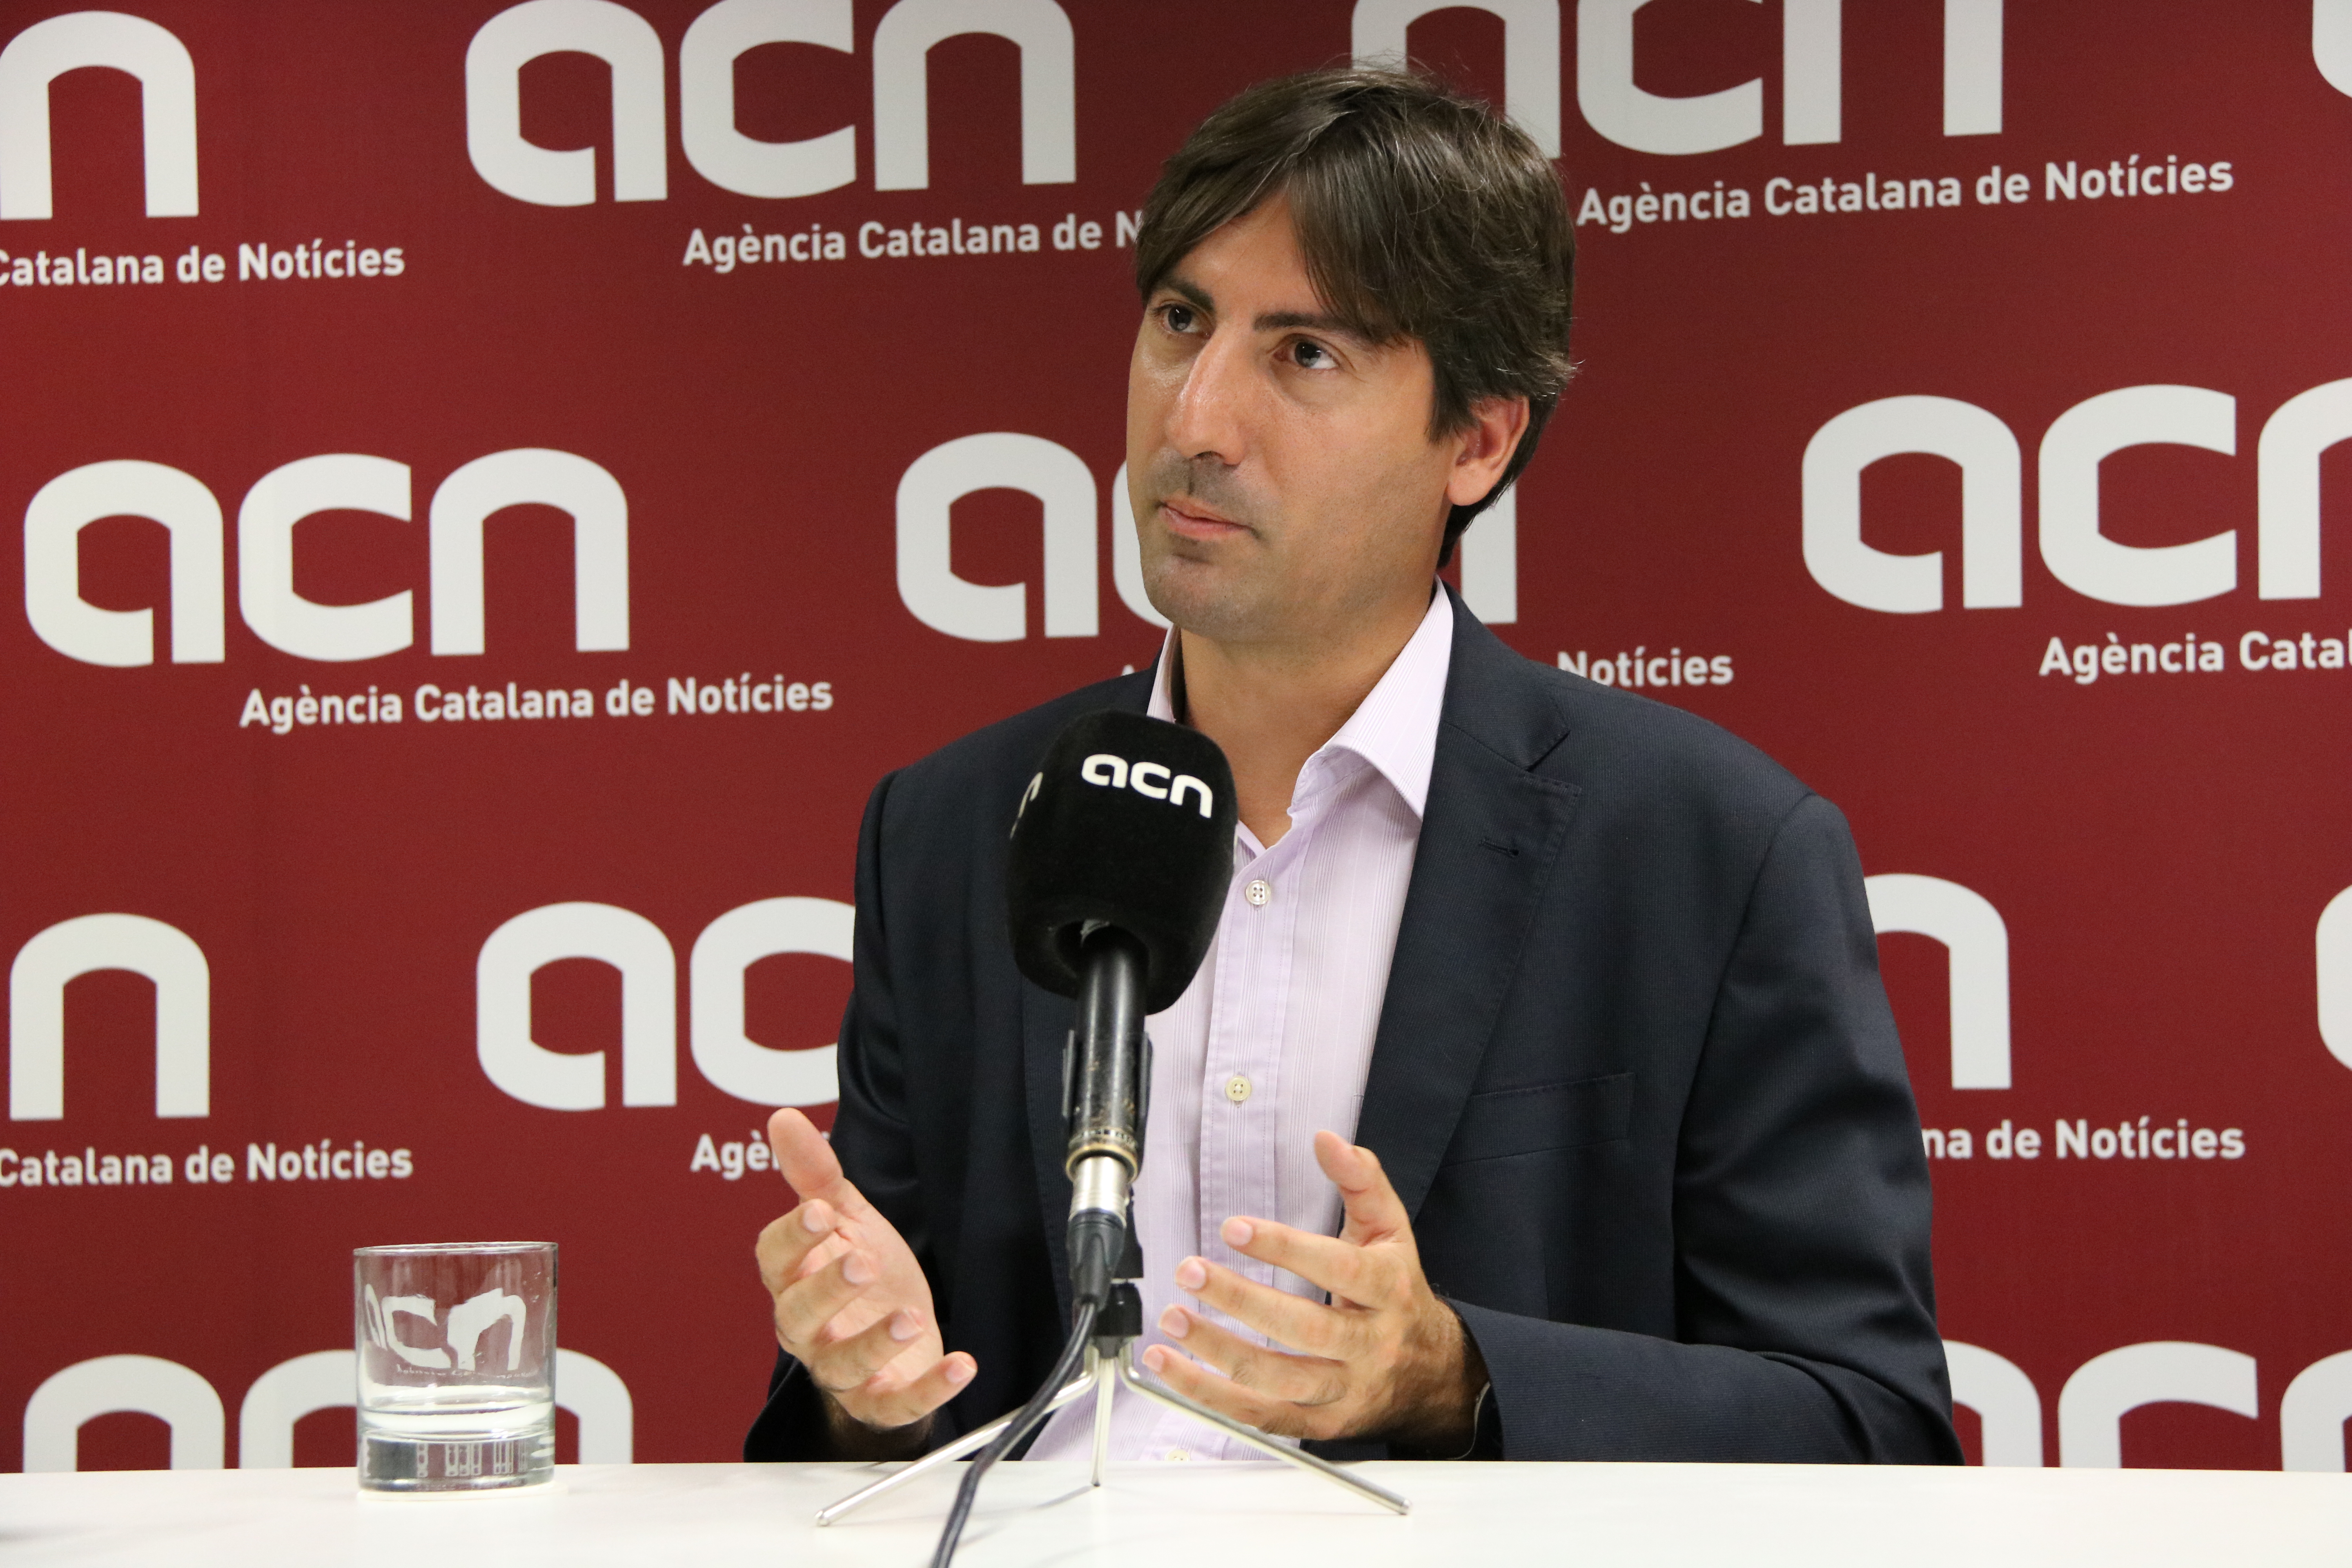 MEP Jordi Solé duing the interview (by Alan Ruiz)